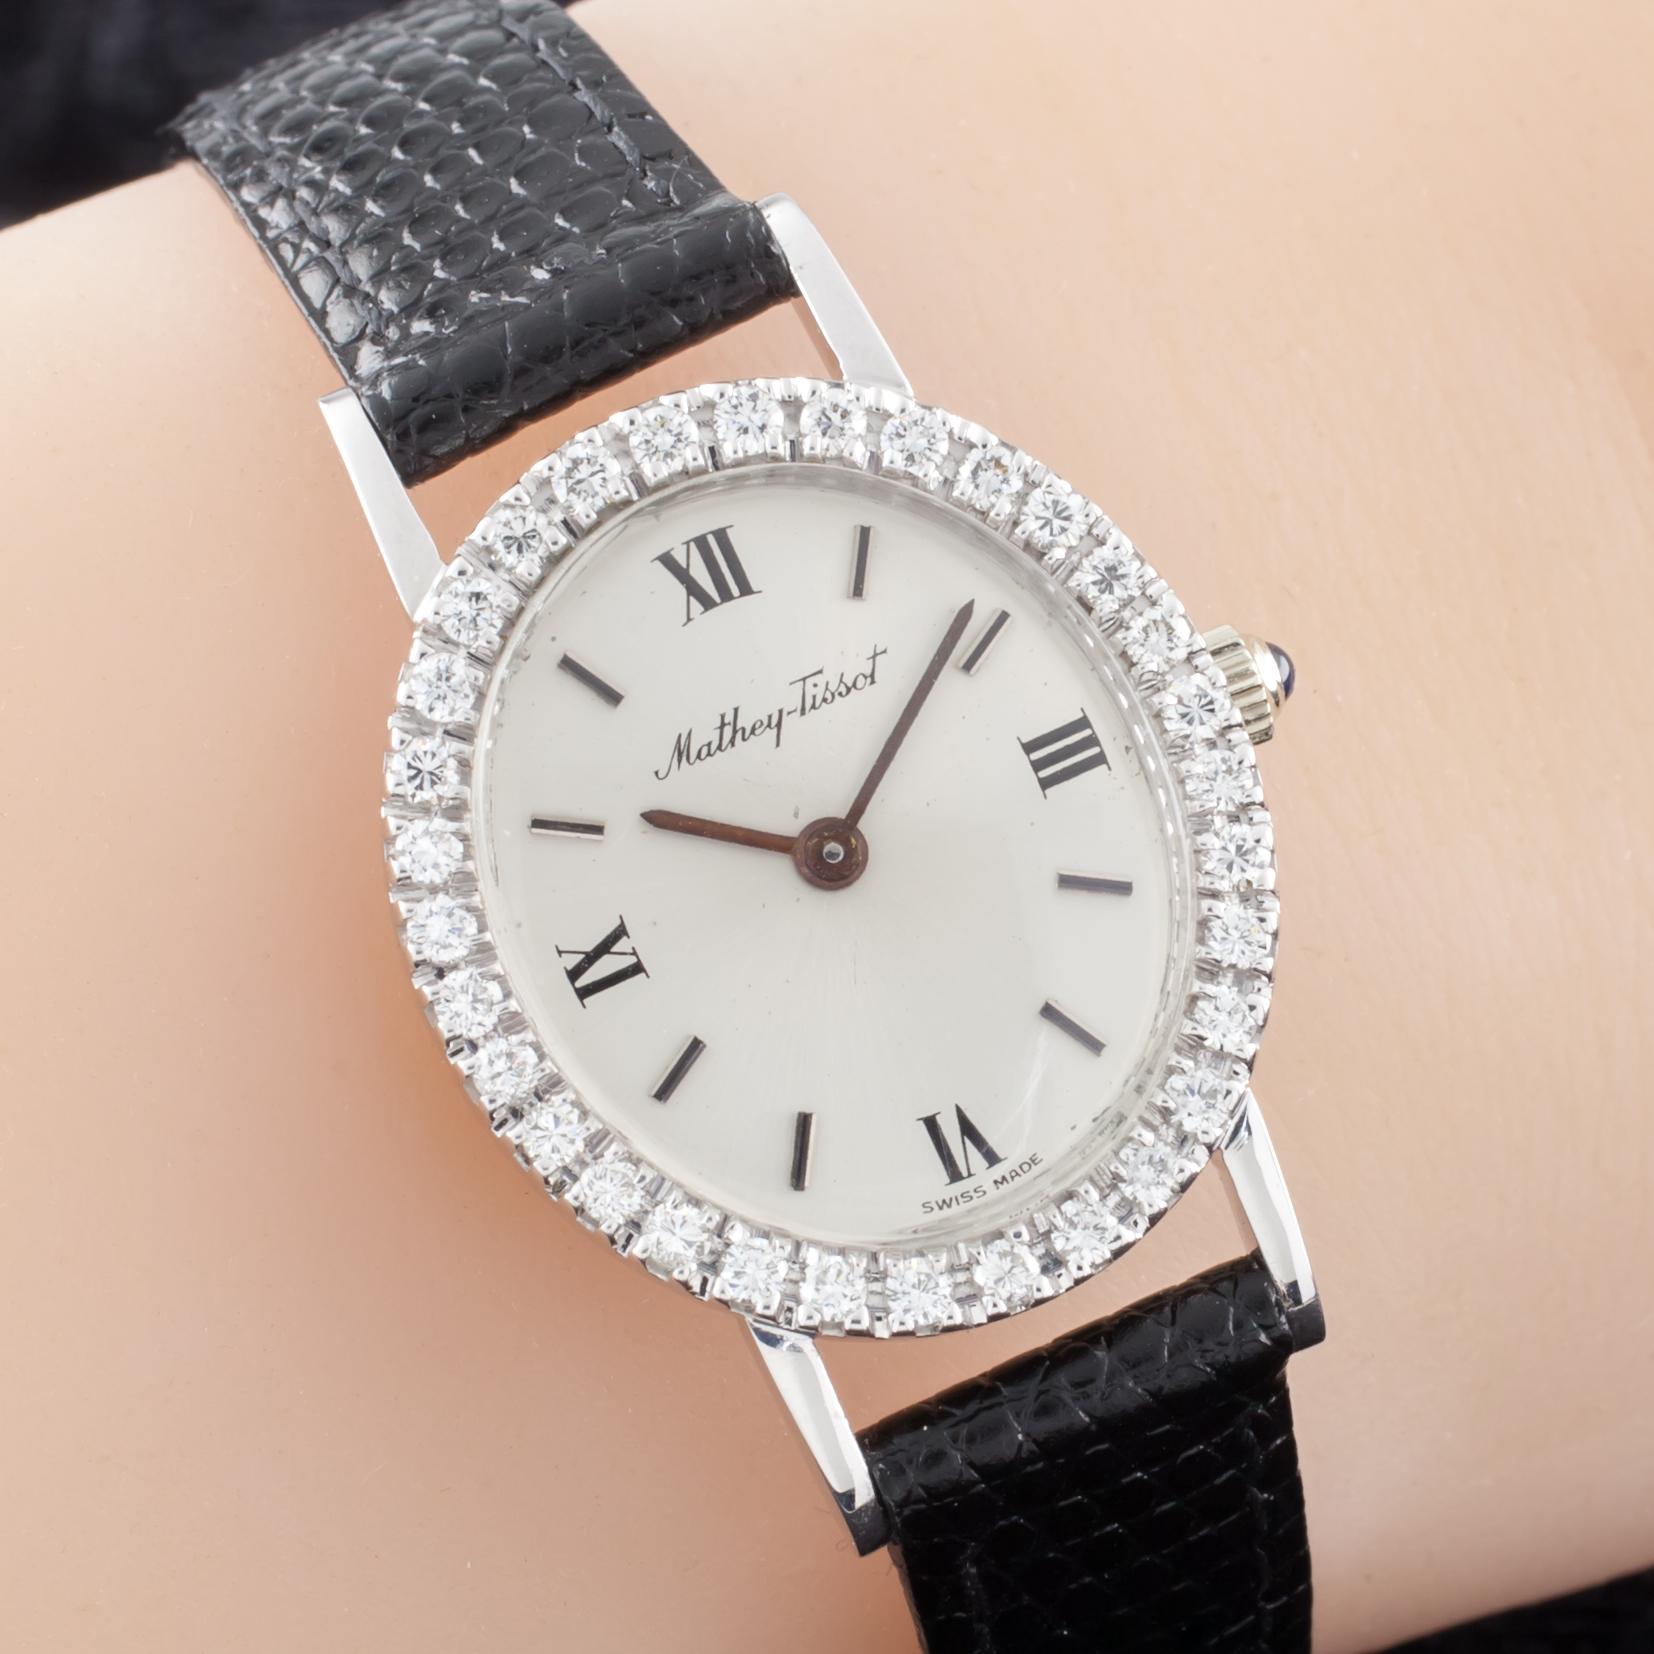 18 Karat Gold Mathey-Tissot Handaufzug Uhr mit Diamant-Lünette & Lederband (Art déco)